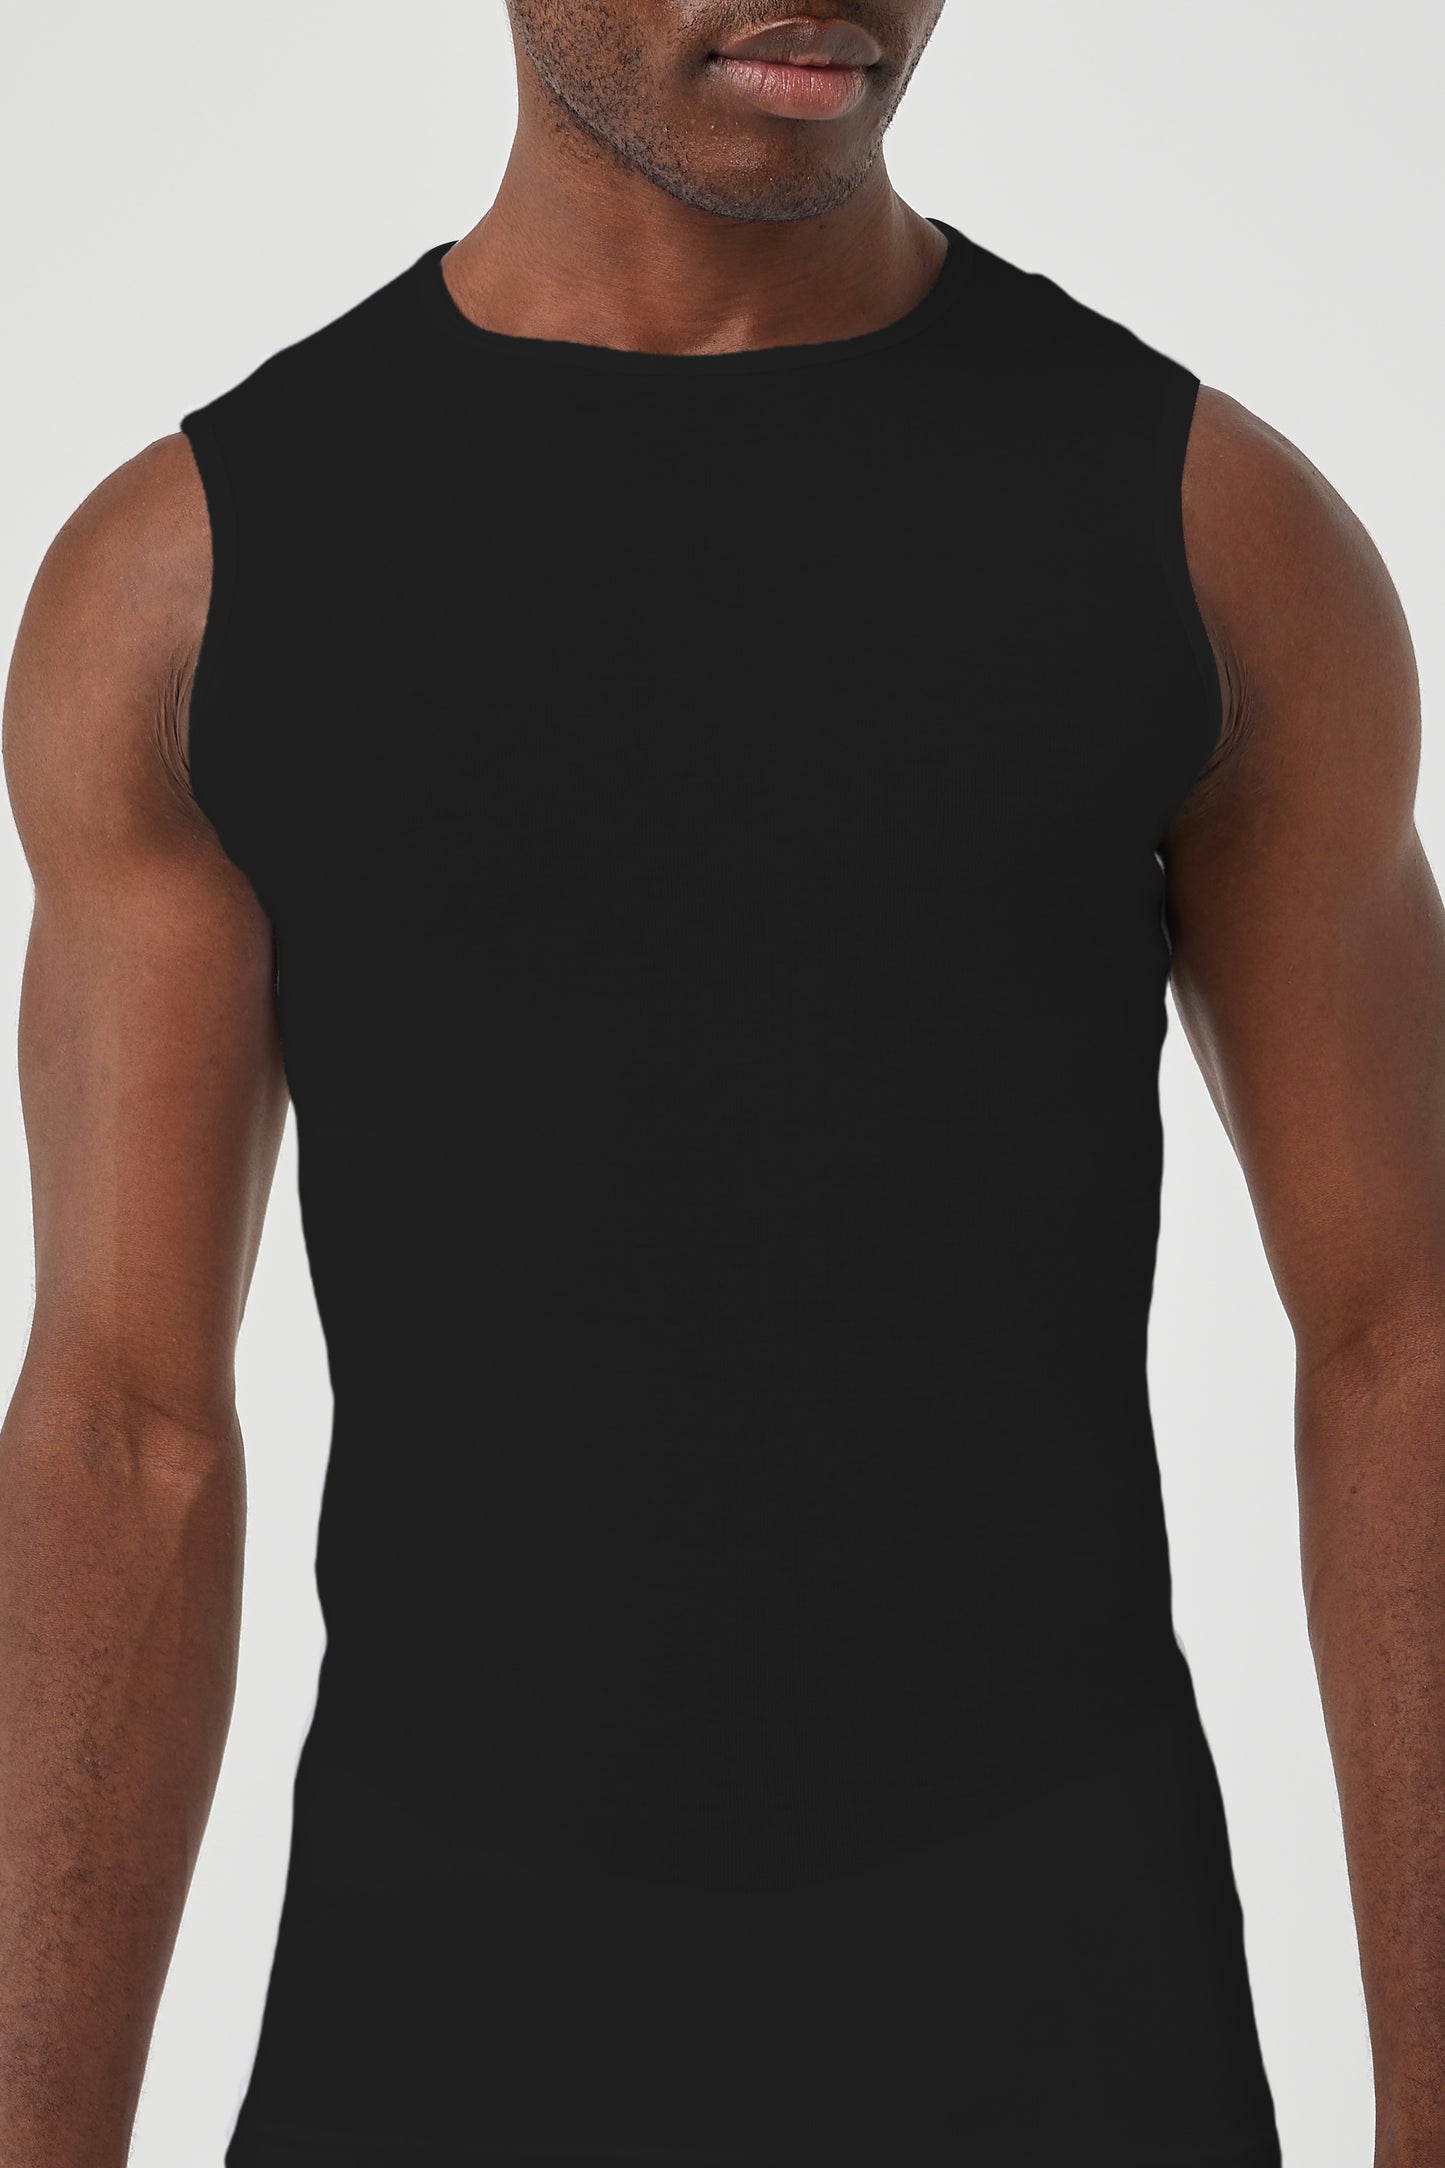 Black 100% Cotton Round-Neck Men's Sleeveless Undershirt